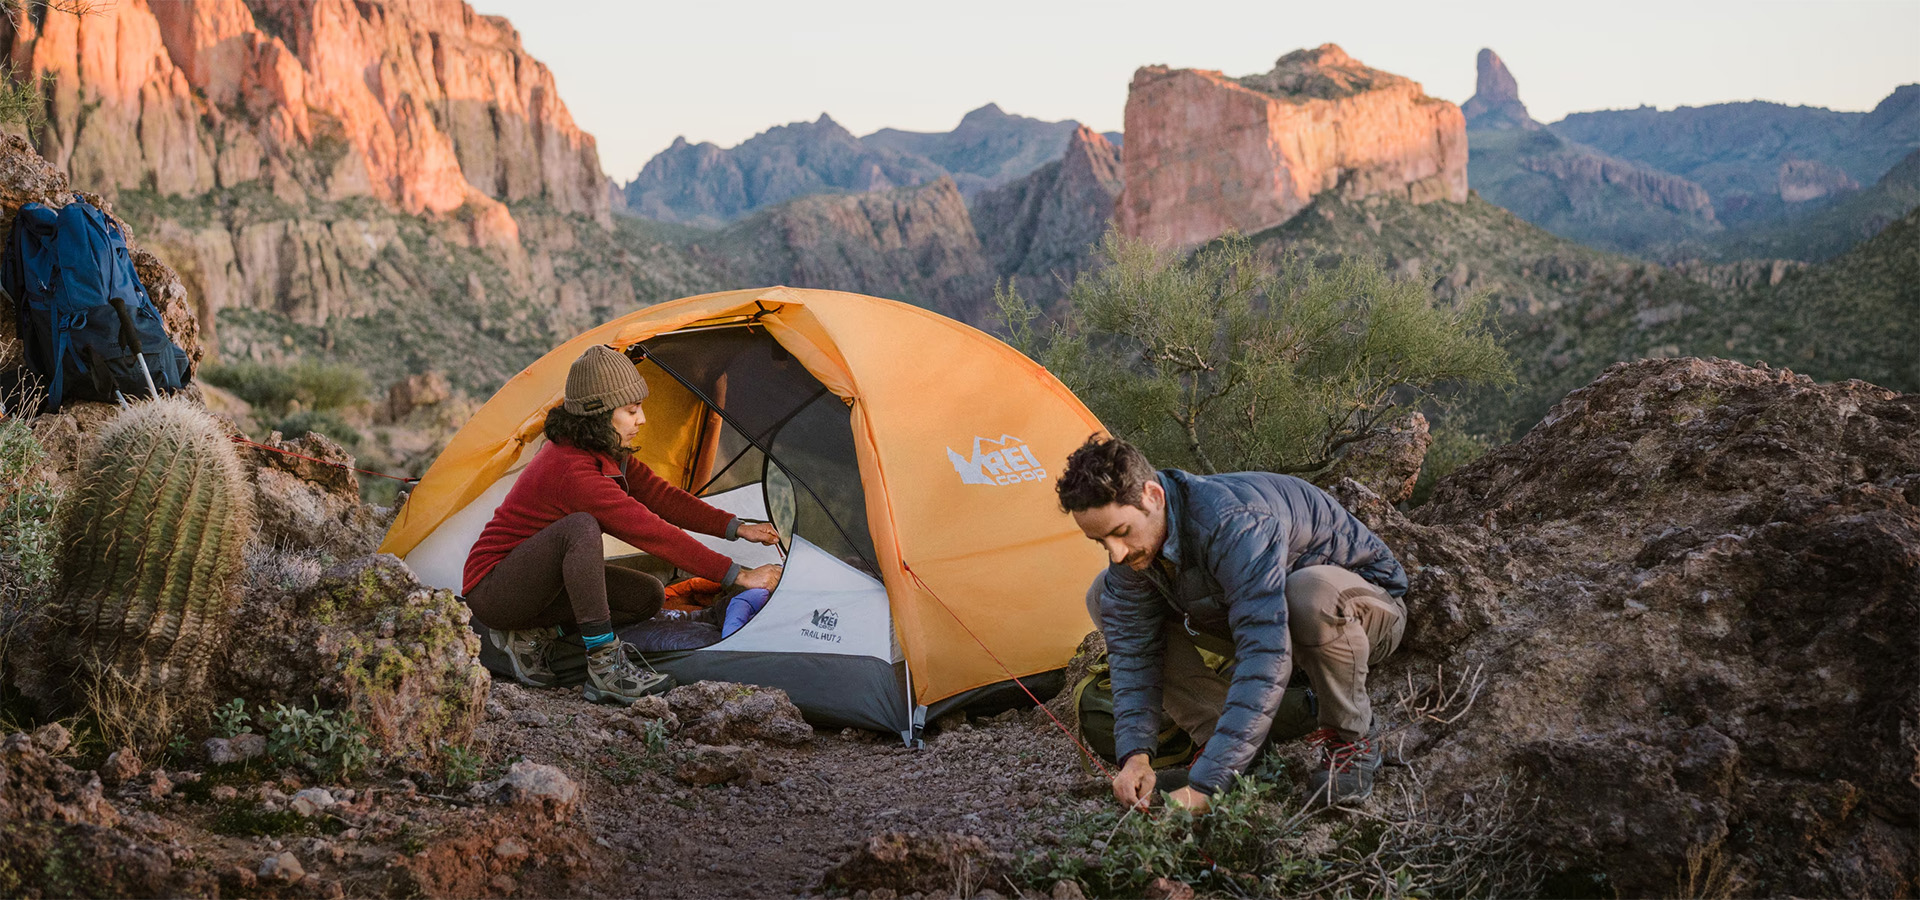 man & woman setting up tent in desert